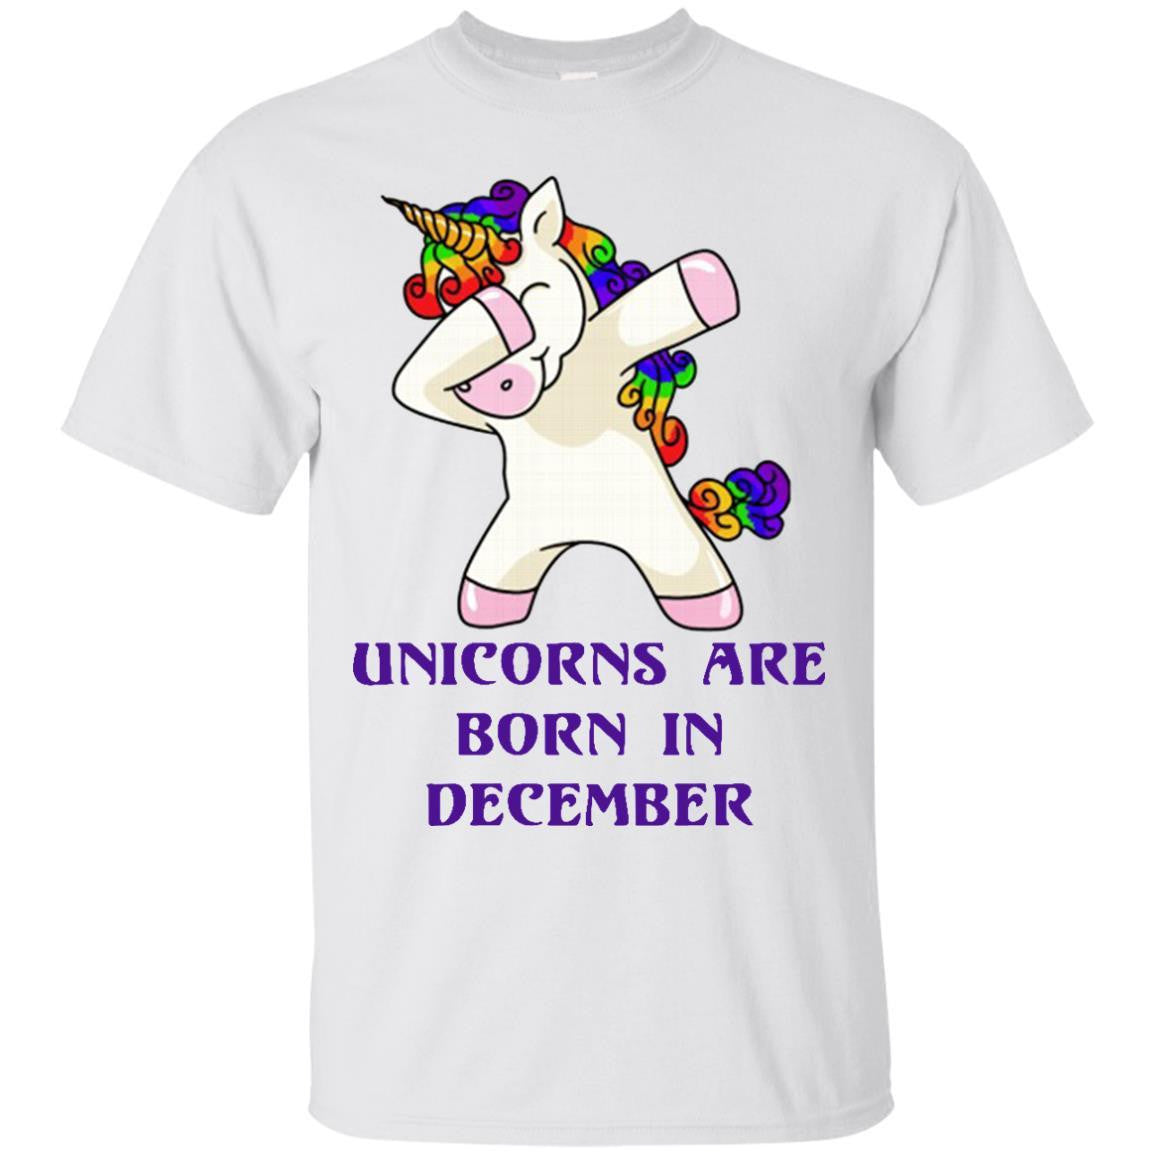 Dabbing Unicorns are Born in December shirt, tank top, racerback